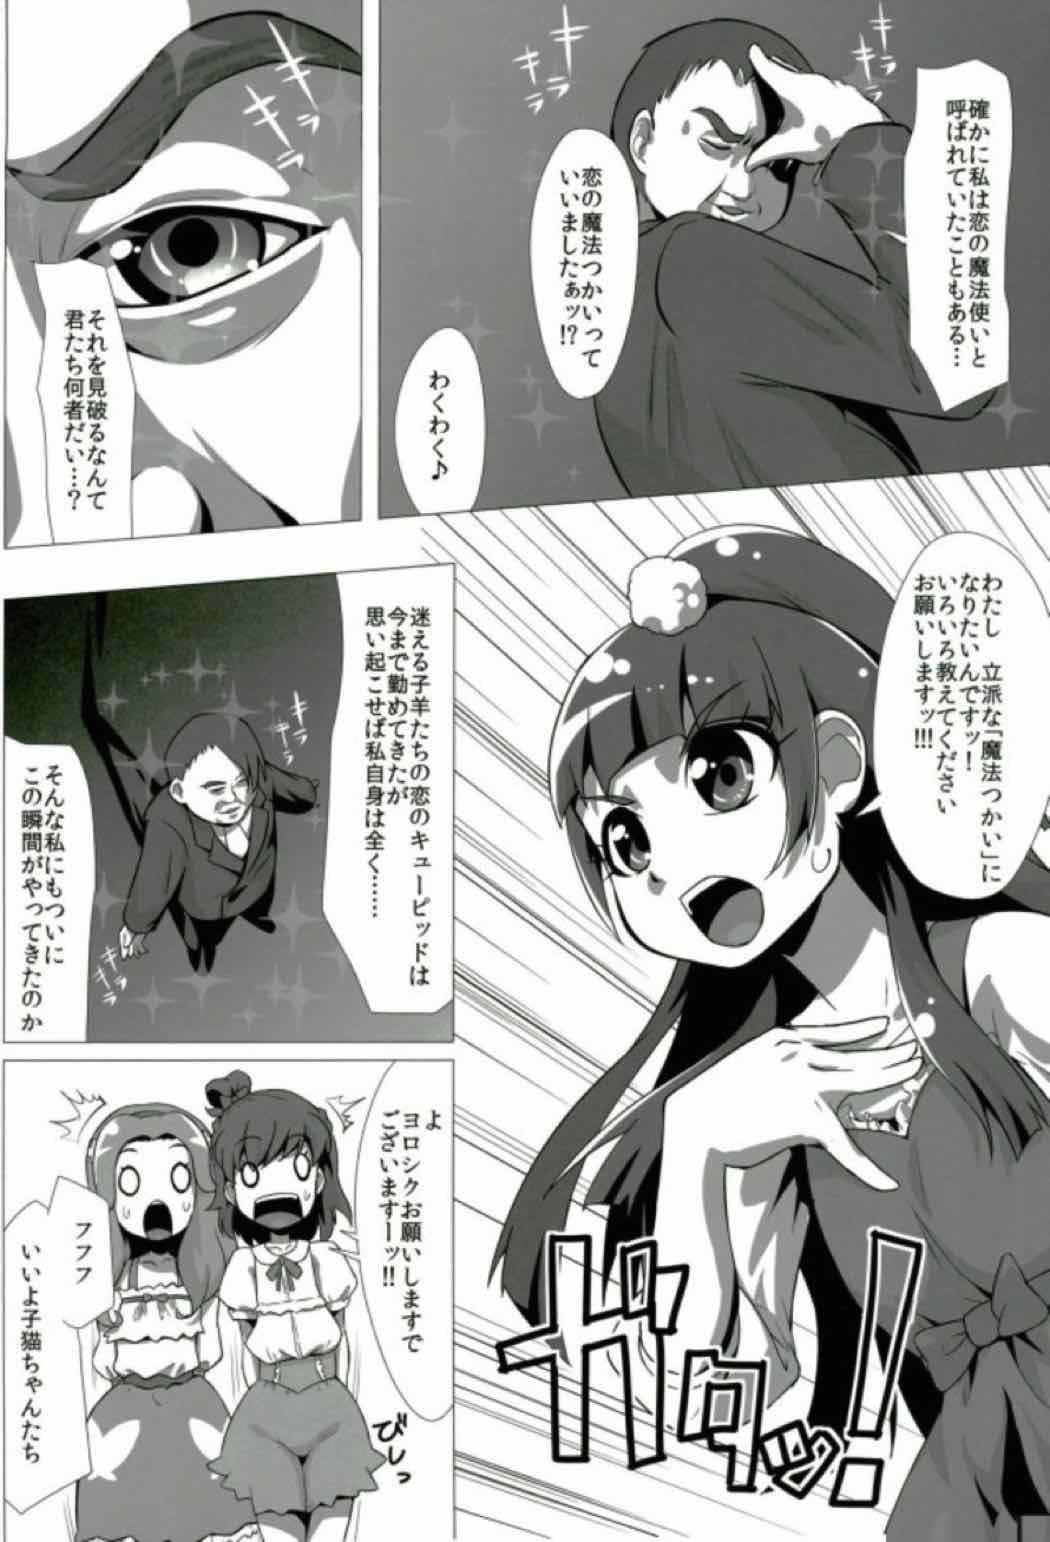 Police Nashimahoukai no Mahou Tsukai - Puella magi madoka magica Maho girls precure Boots - Page 5